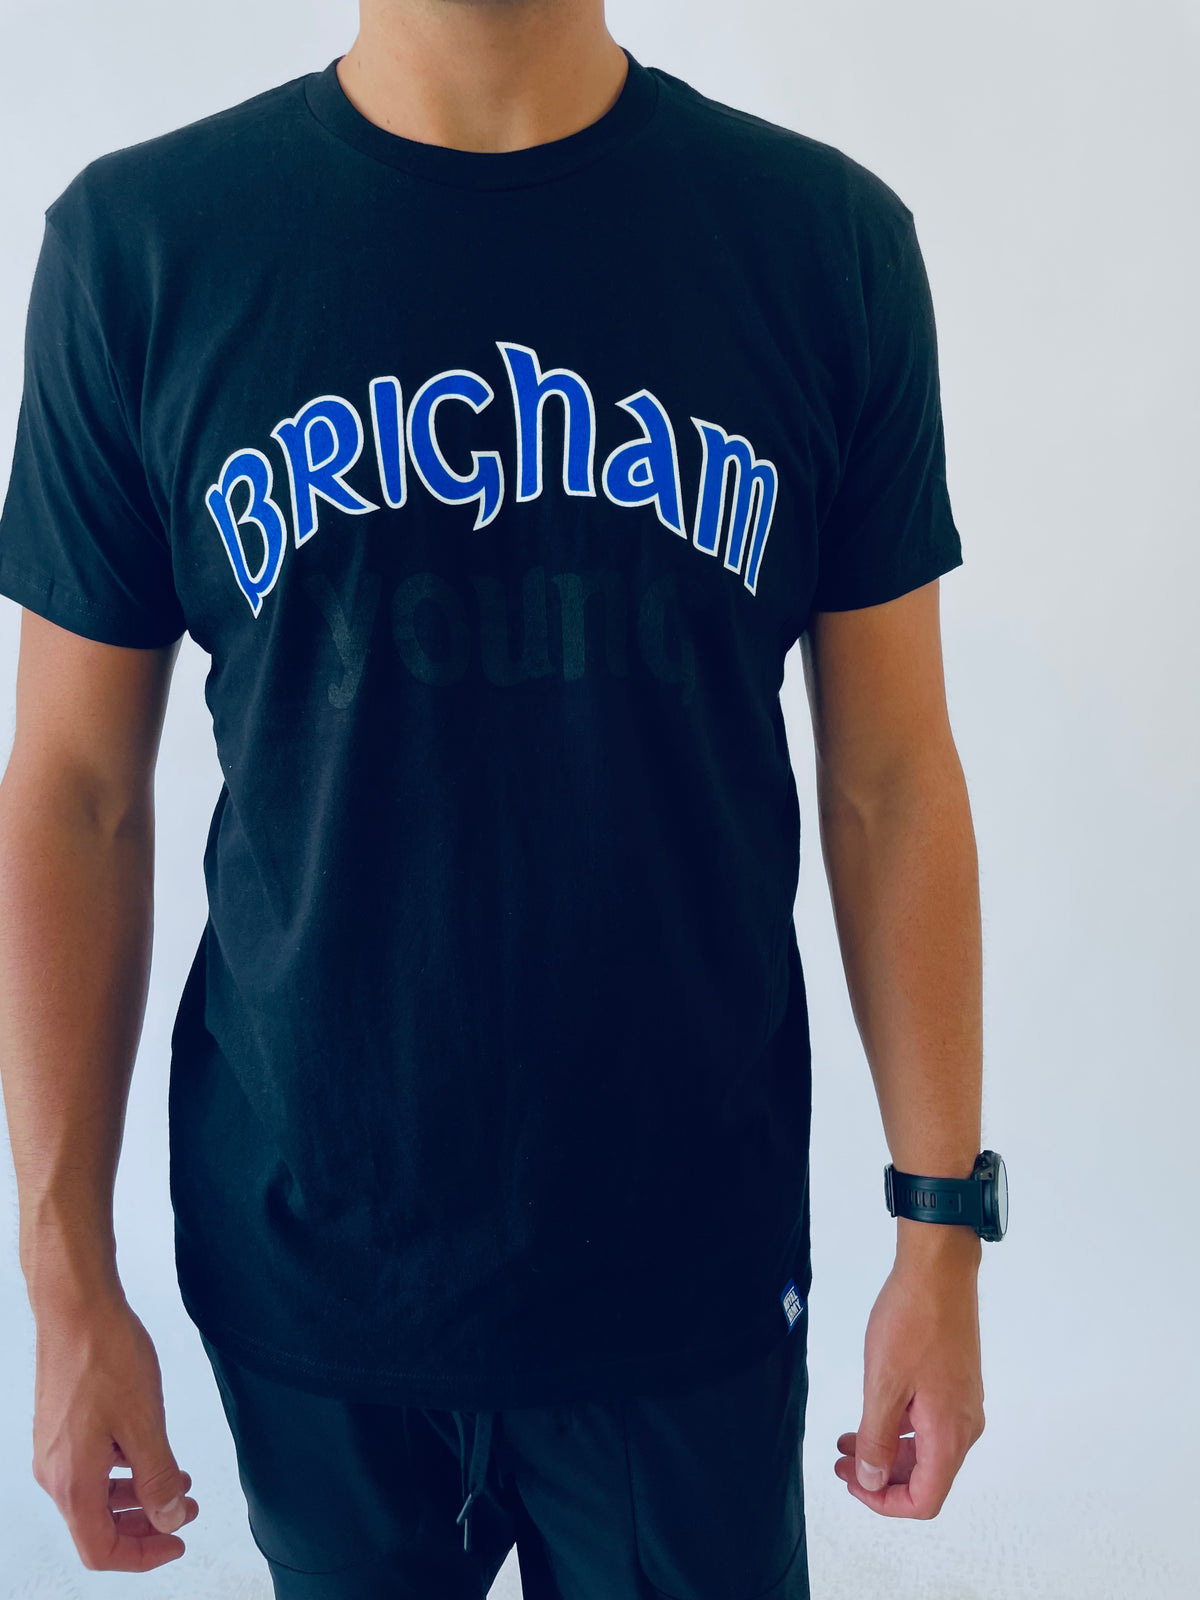 Blackout Vintage Brigham Young Script BYU T-Shirt